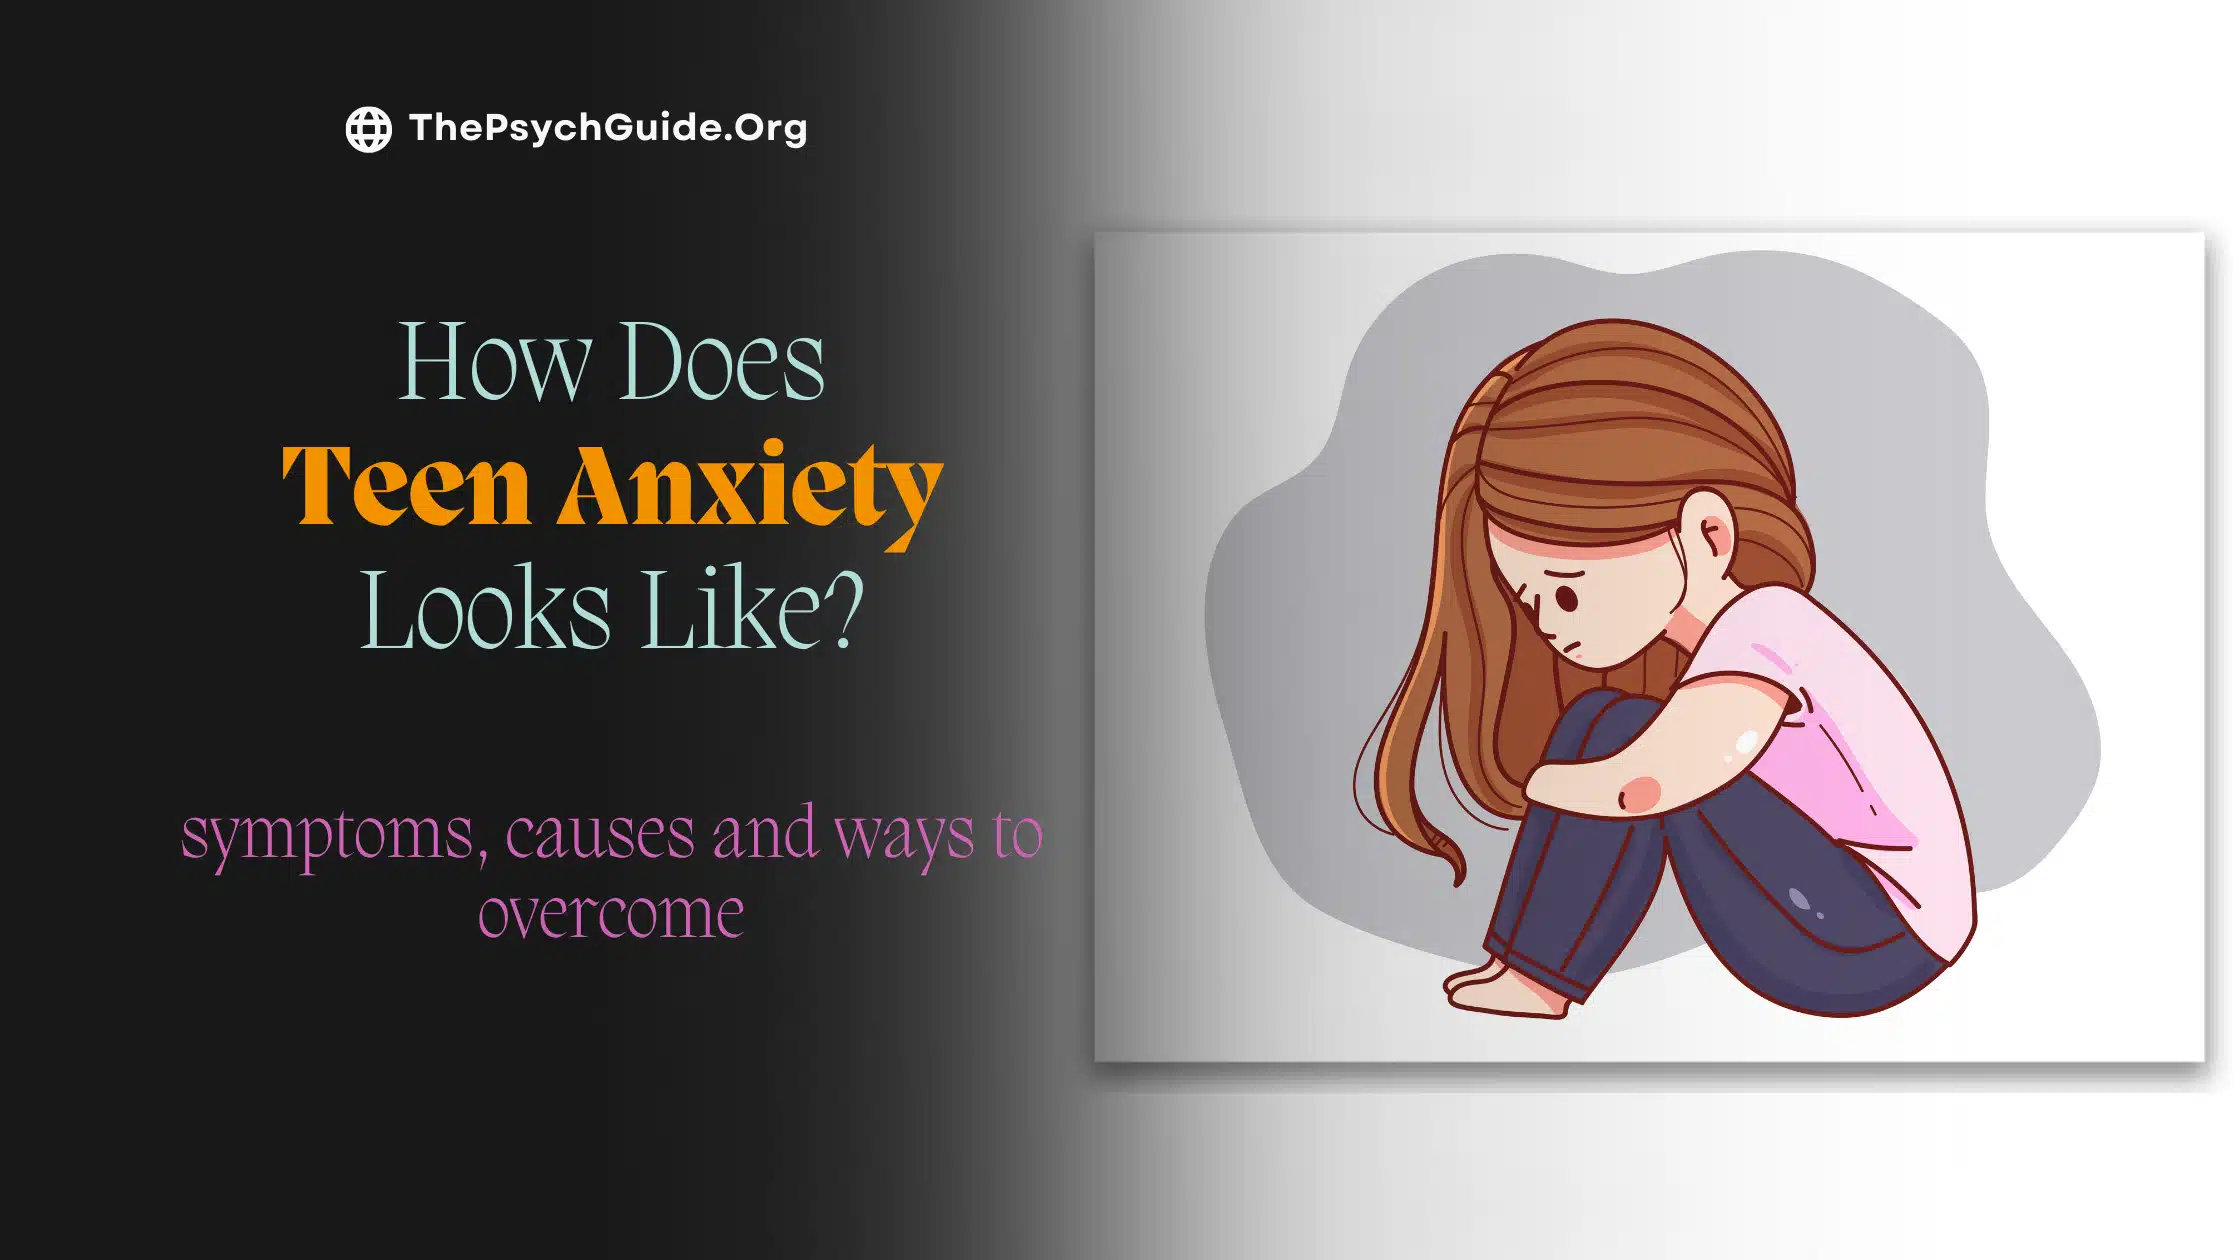 Symptoms of anxiety in teens